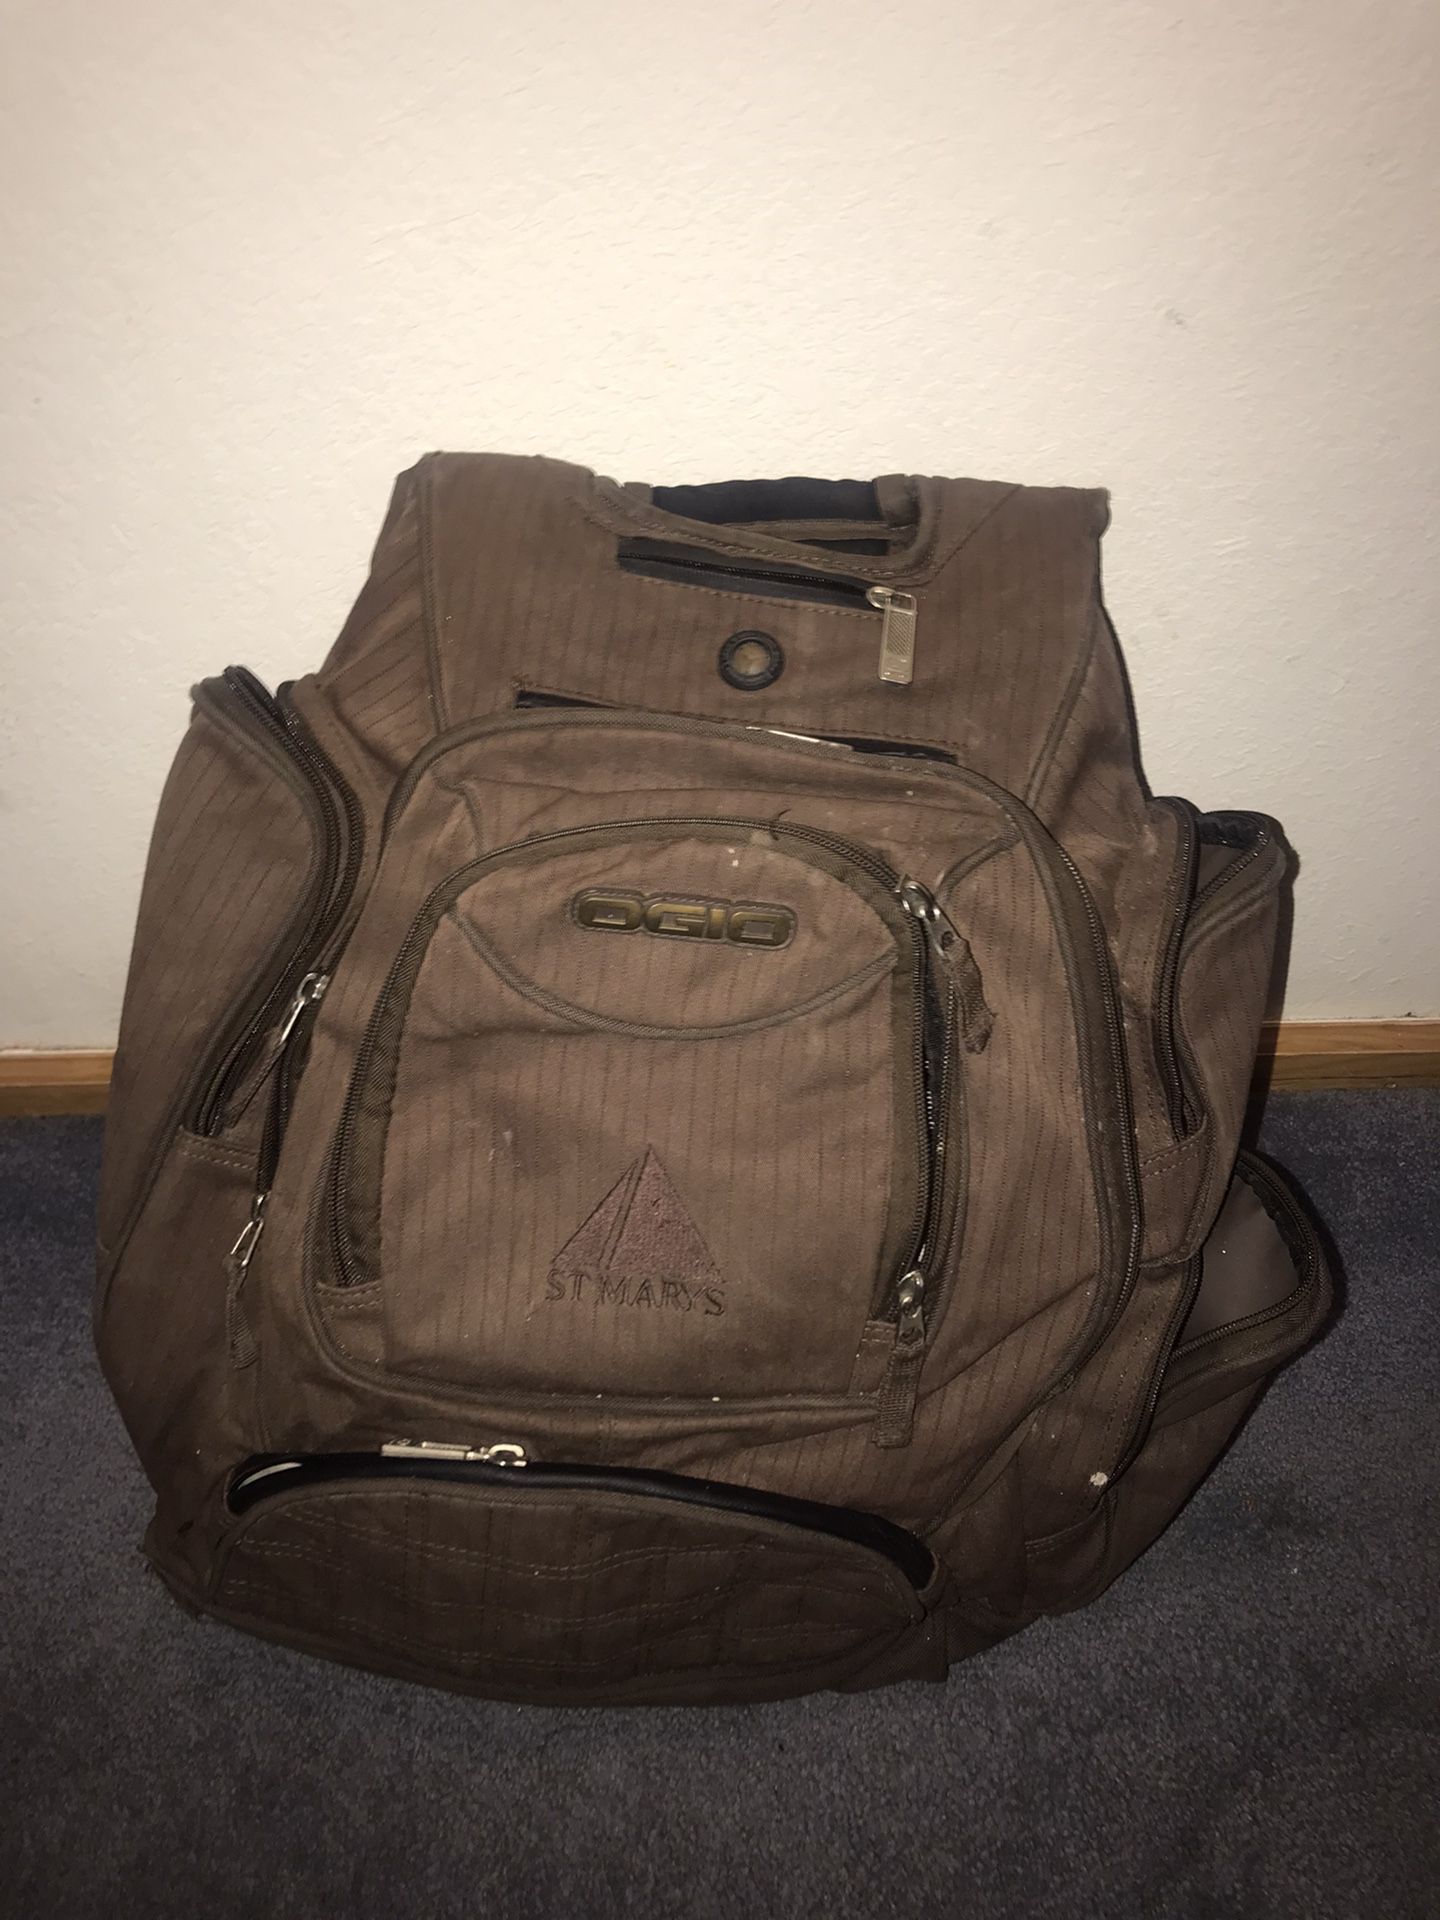 OGIO Backpack $20